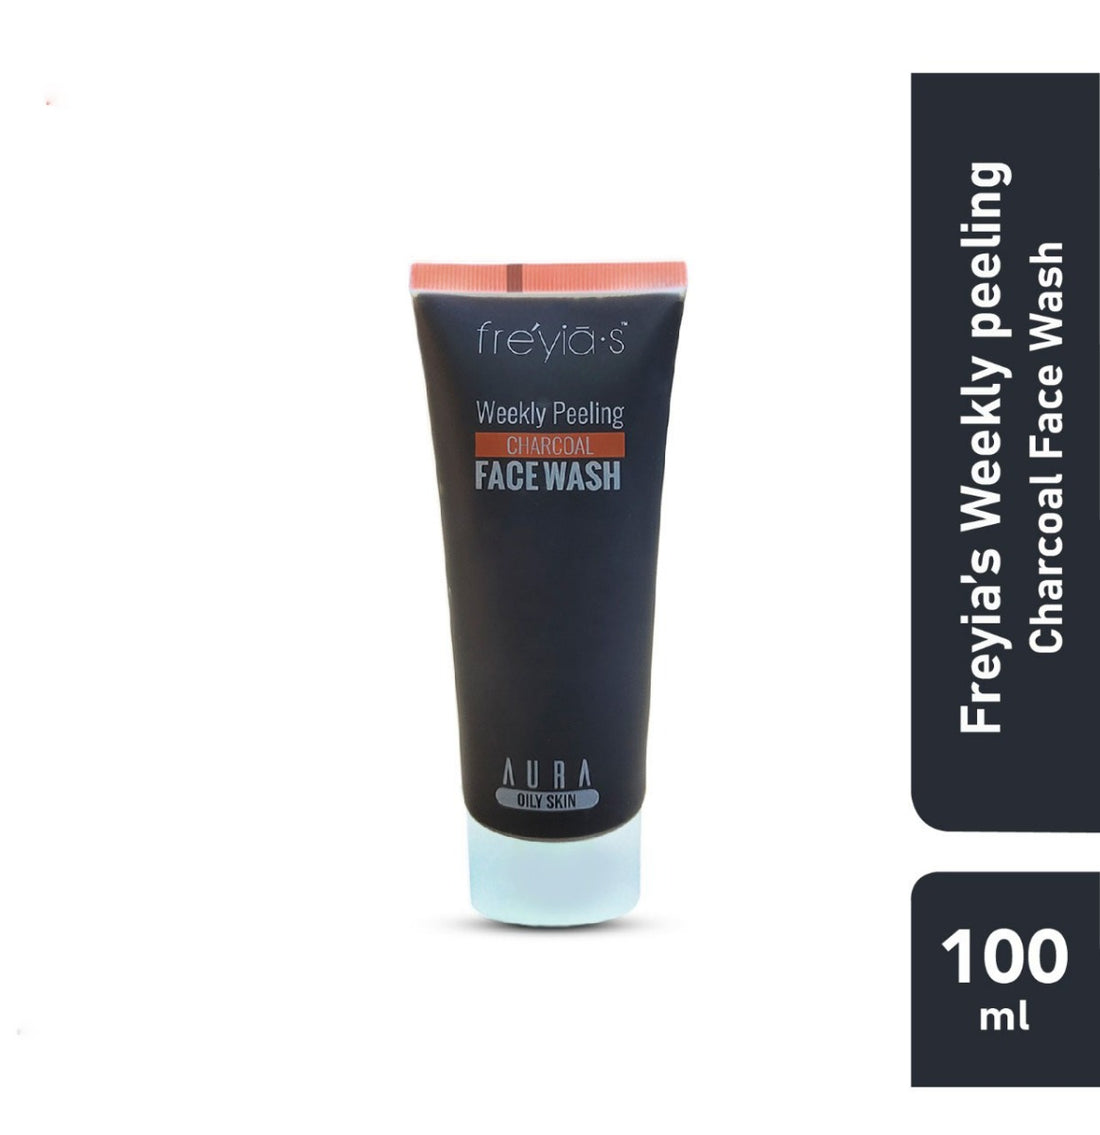 Freyias Weekly Peeling Face Wash (100ml) - Charcoal